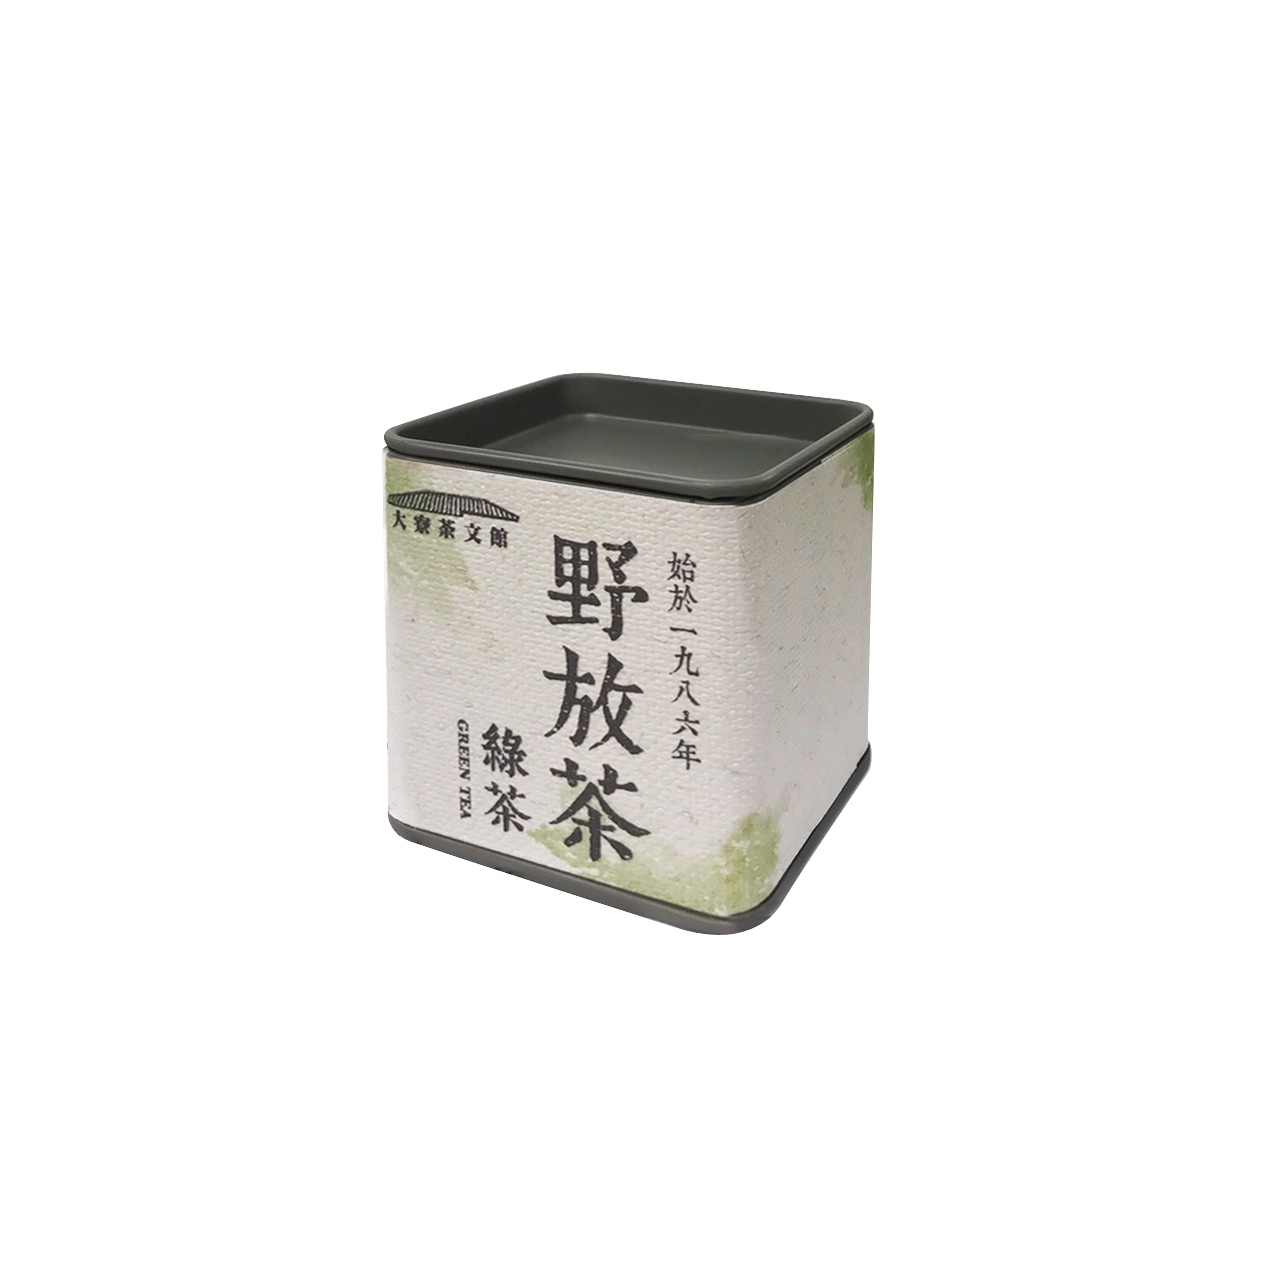 Daliao-Tea Bag-Green Tea